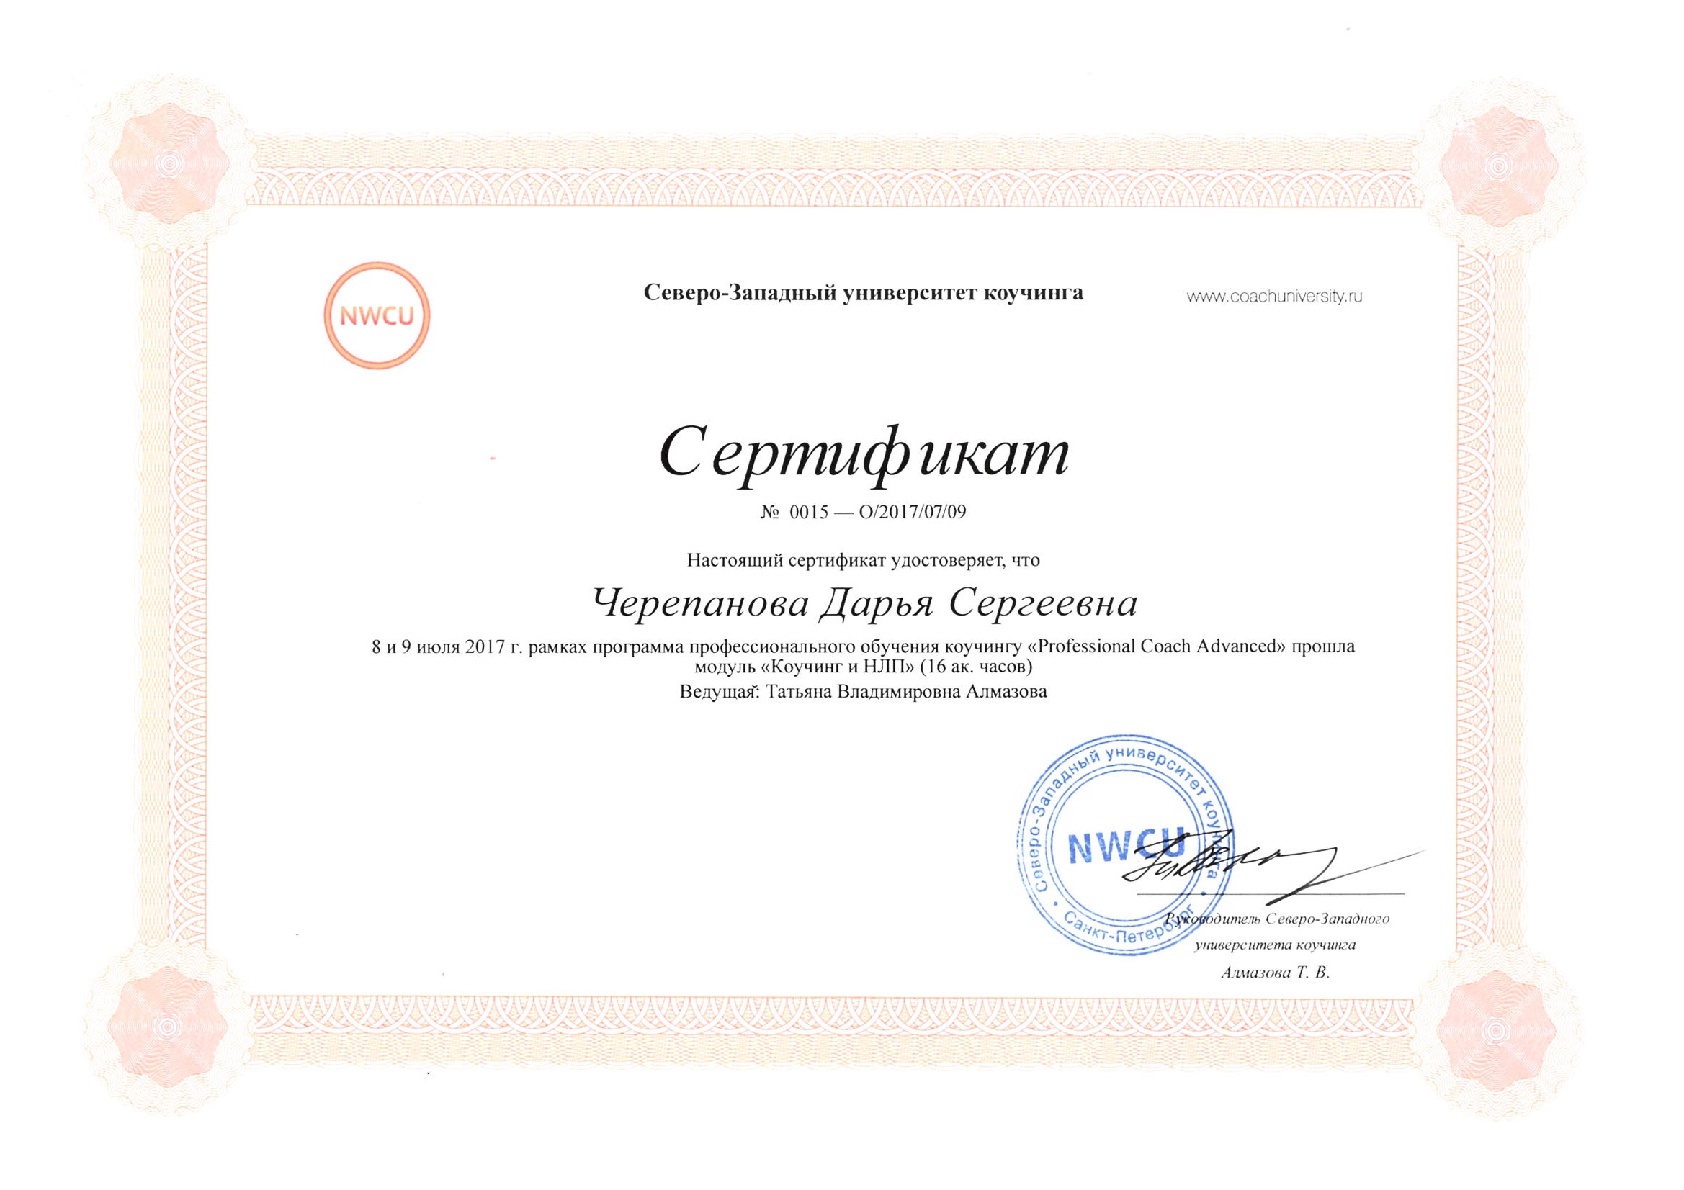 Сертификат «Коучинг и НЛП» уровня Advanced